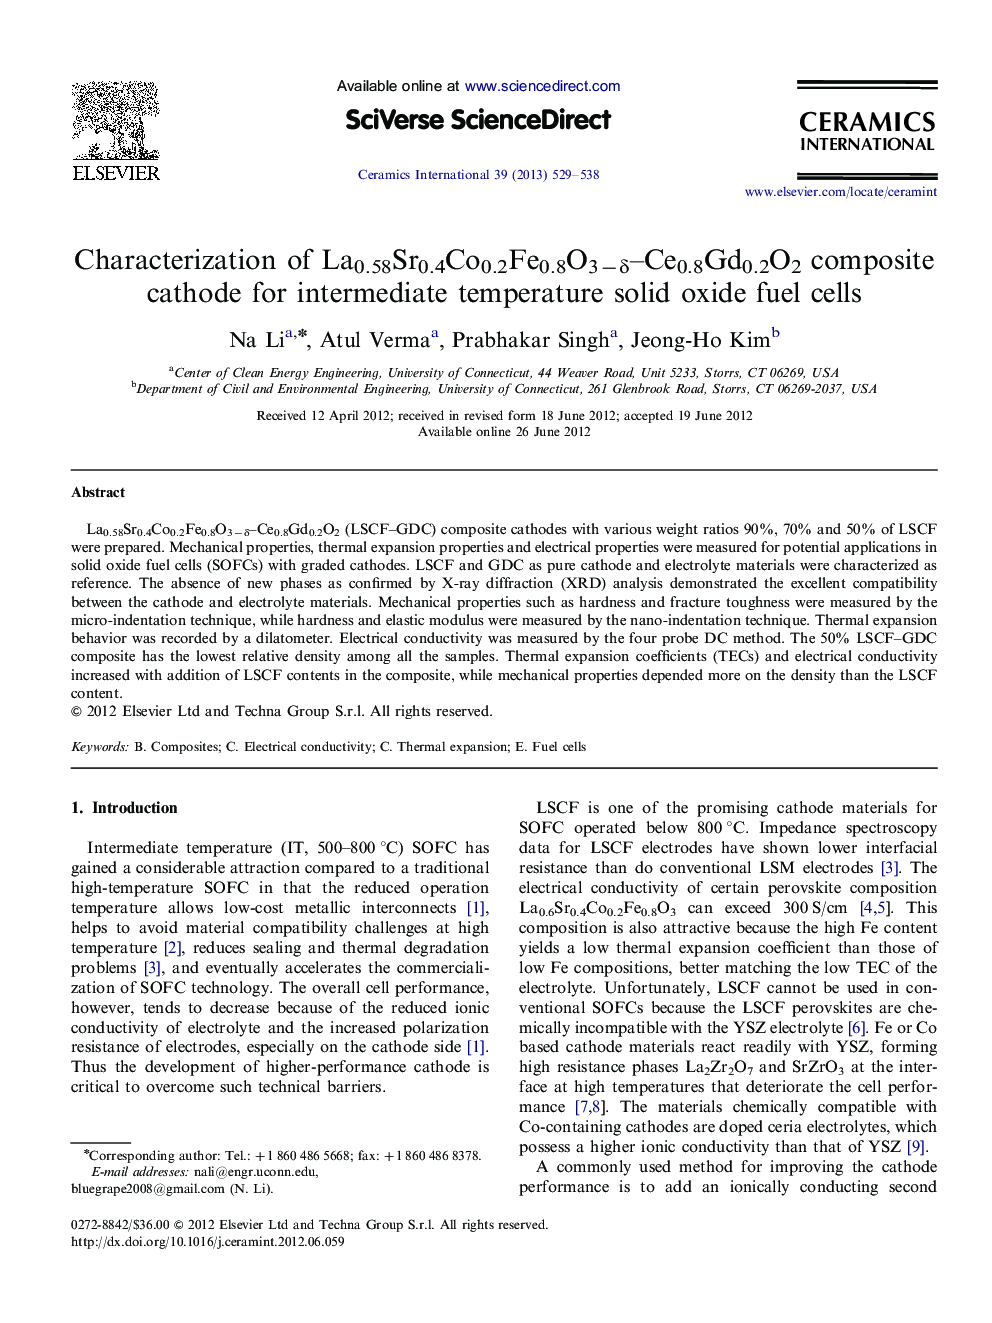 Characterization of La0.58Sr0.4Co0.2Fe0.8O3−δ–Ce0.8Gd0.2O2 composite cathode for intermediate temperature solid oxide fuel cells